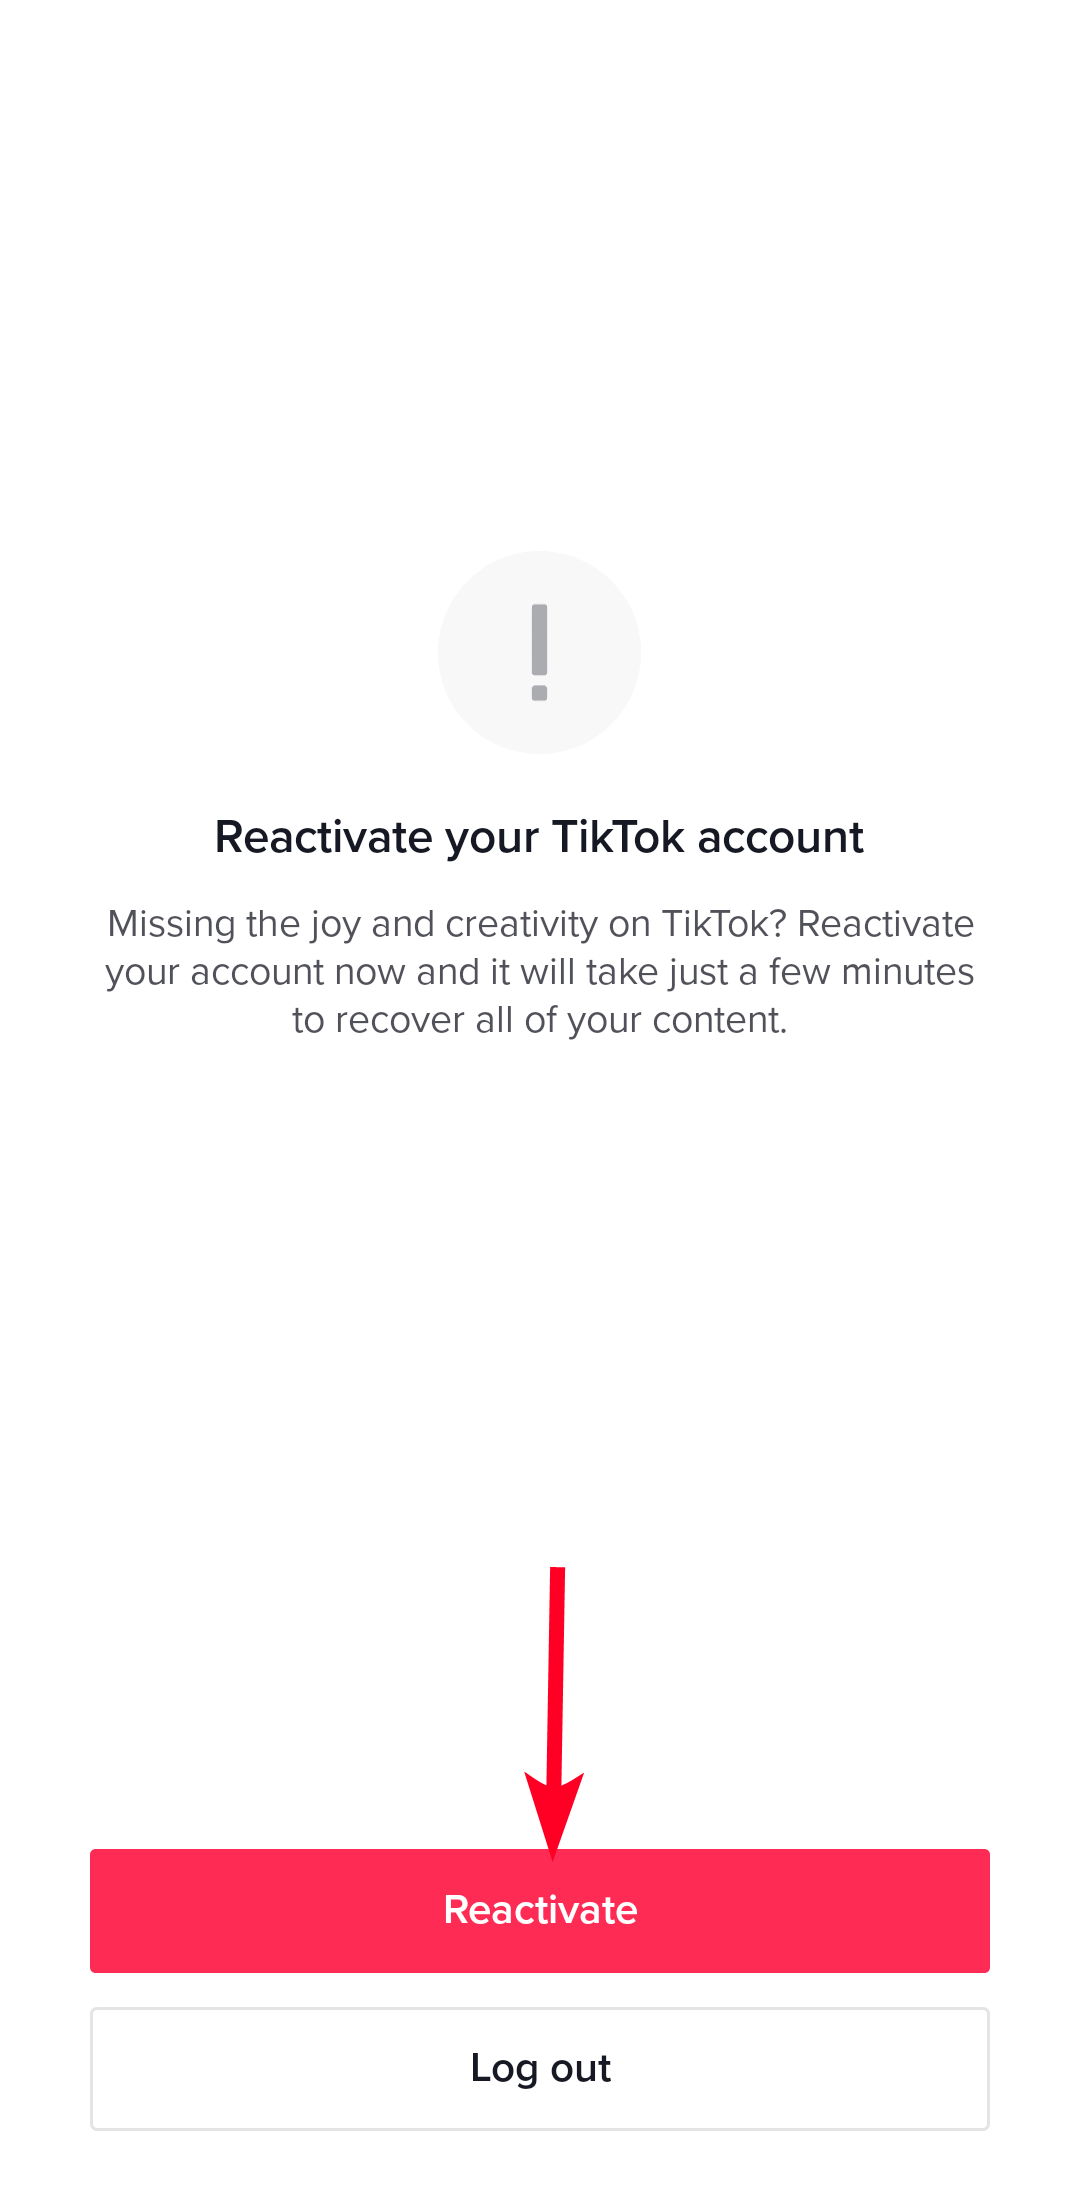 Reactivate your TikTok account option